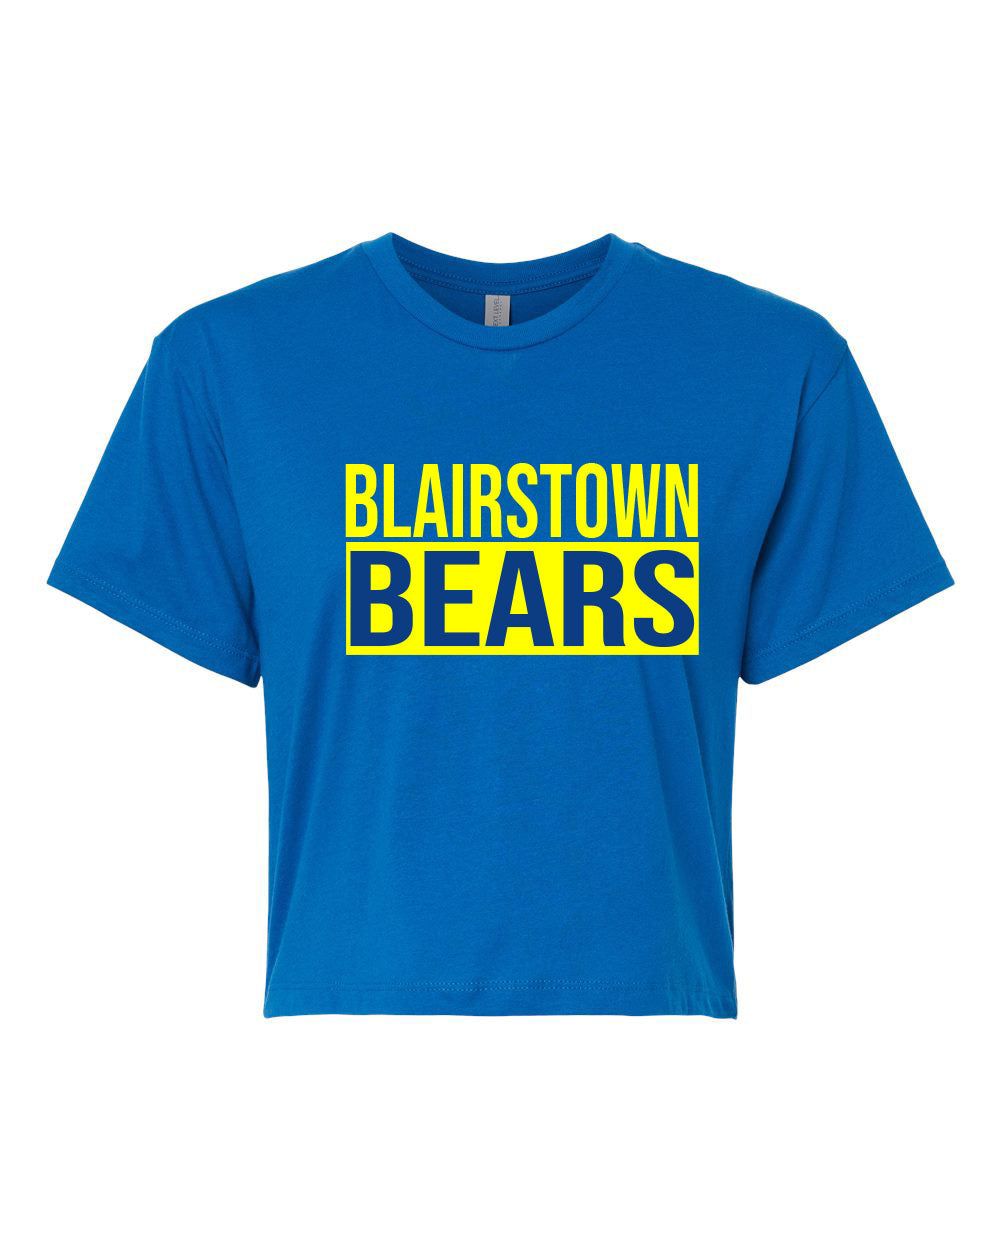 Blairstown Bears Design 12 Crop Top